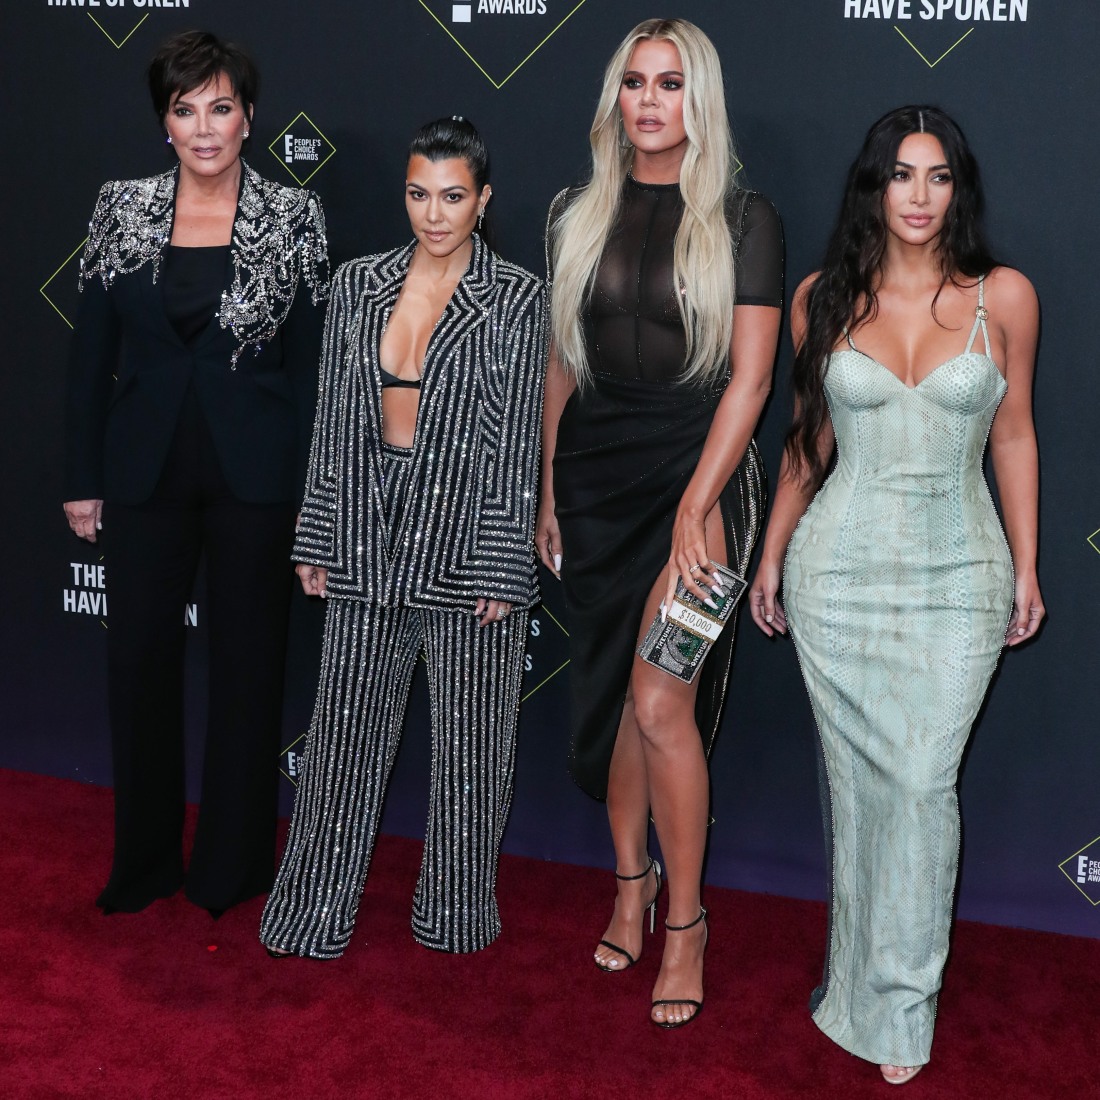 Kris Jenner, Kourtney Kardashian, Khloe Kardashian and Kim Kardashian West arrive at the 2019 E! People's Choice Awards held at Barker Hangar on November 10, 2019 in Santa Monica, Los Angeles, California, United States.